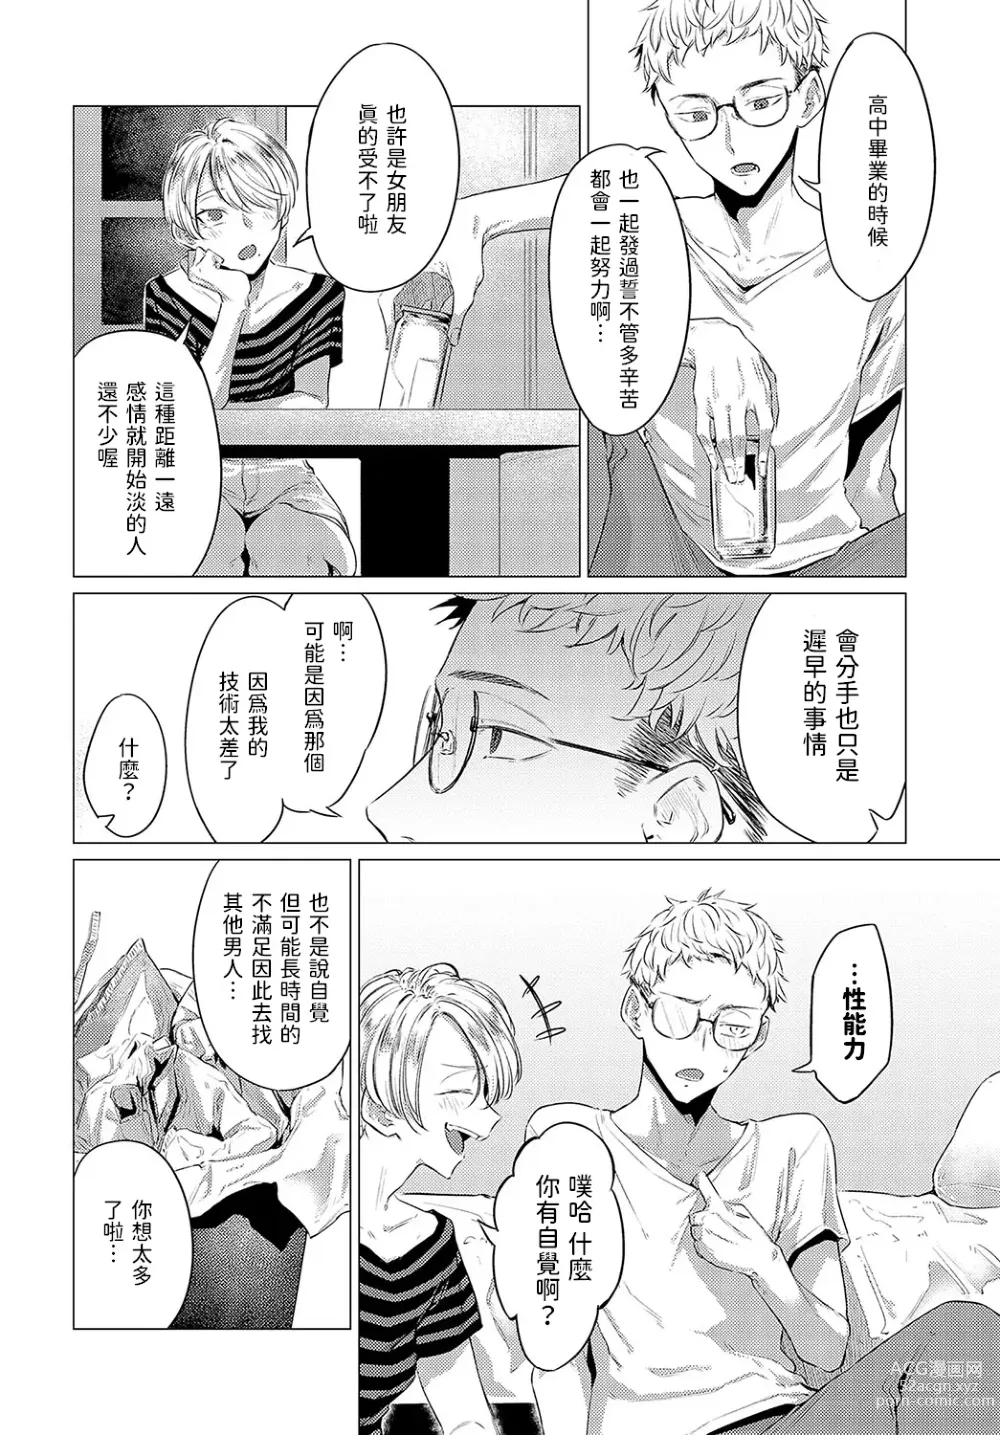 Page 4 of manga Houyuu